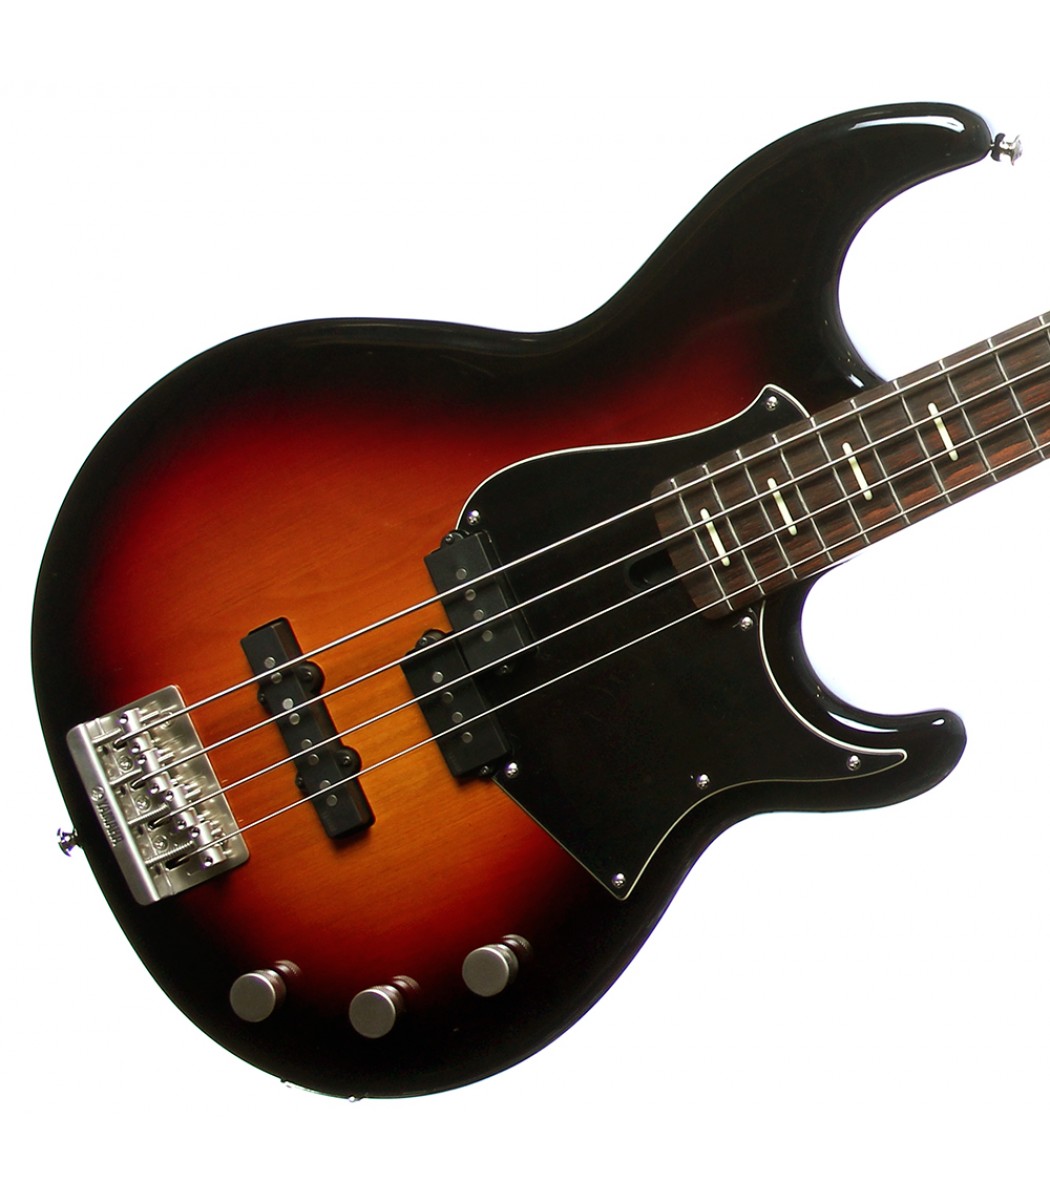 Squier Bass Guitar Cheapest Online, Save 51% | jlcatj.gob.mx